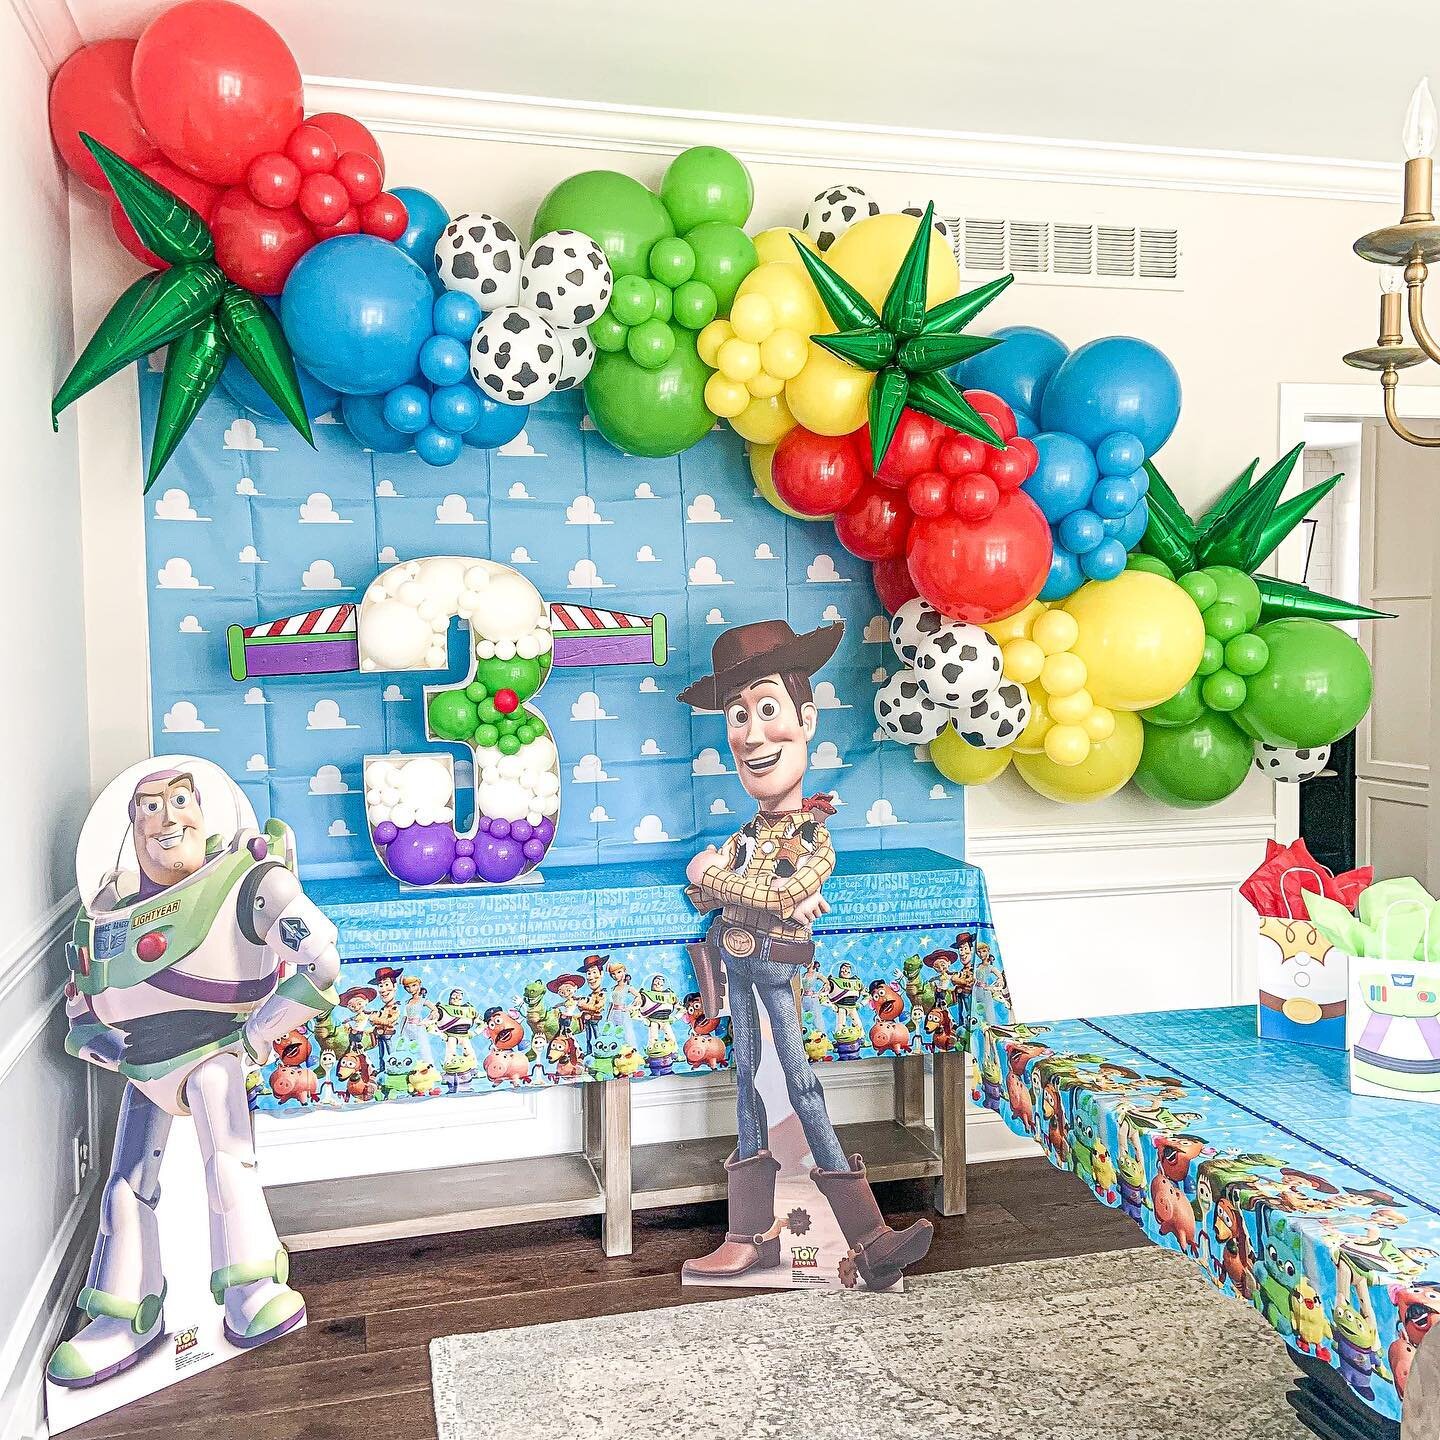 To infinity and BALLOONS!!!🚀🎈
.
.
.
.
.
#ballooonmosaic #toystoryparty #toystory #buzzlightyear #toystorytheme #birthdayballoons #3rdbirthday #thirdbirthday #woody #kidsbirthdayparty #birthdayparty #birthdayboy #balloongarland #balloongarlands #org